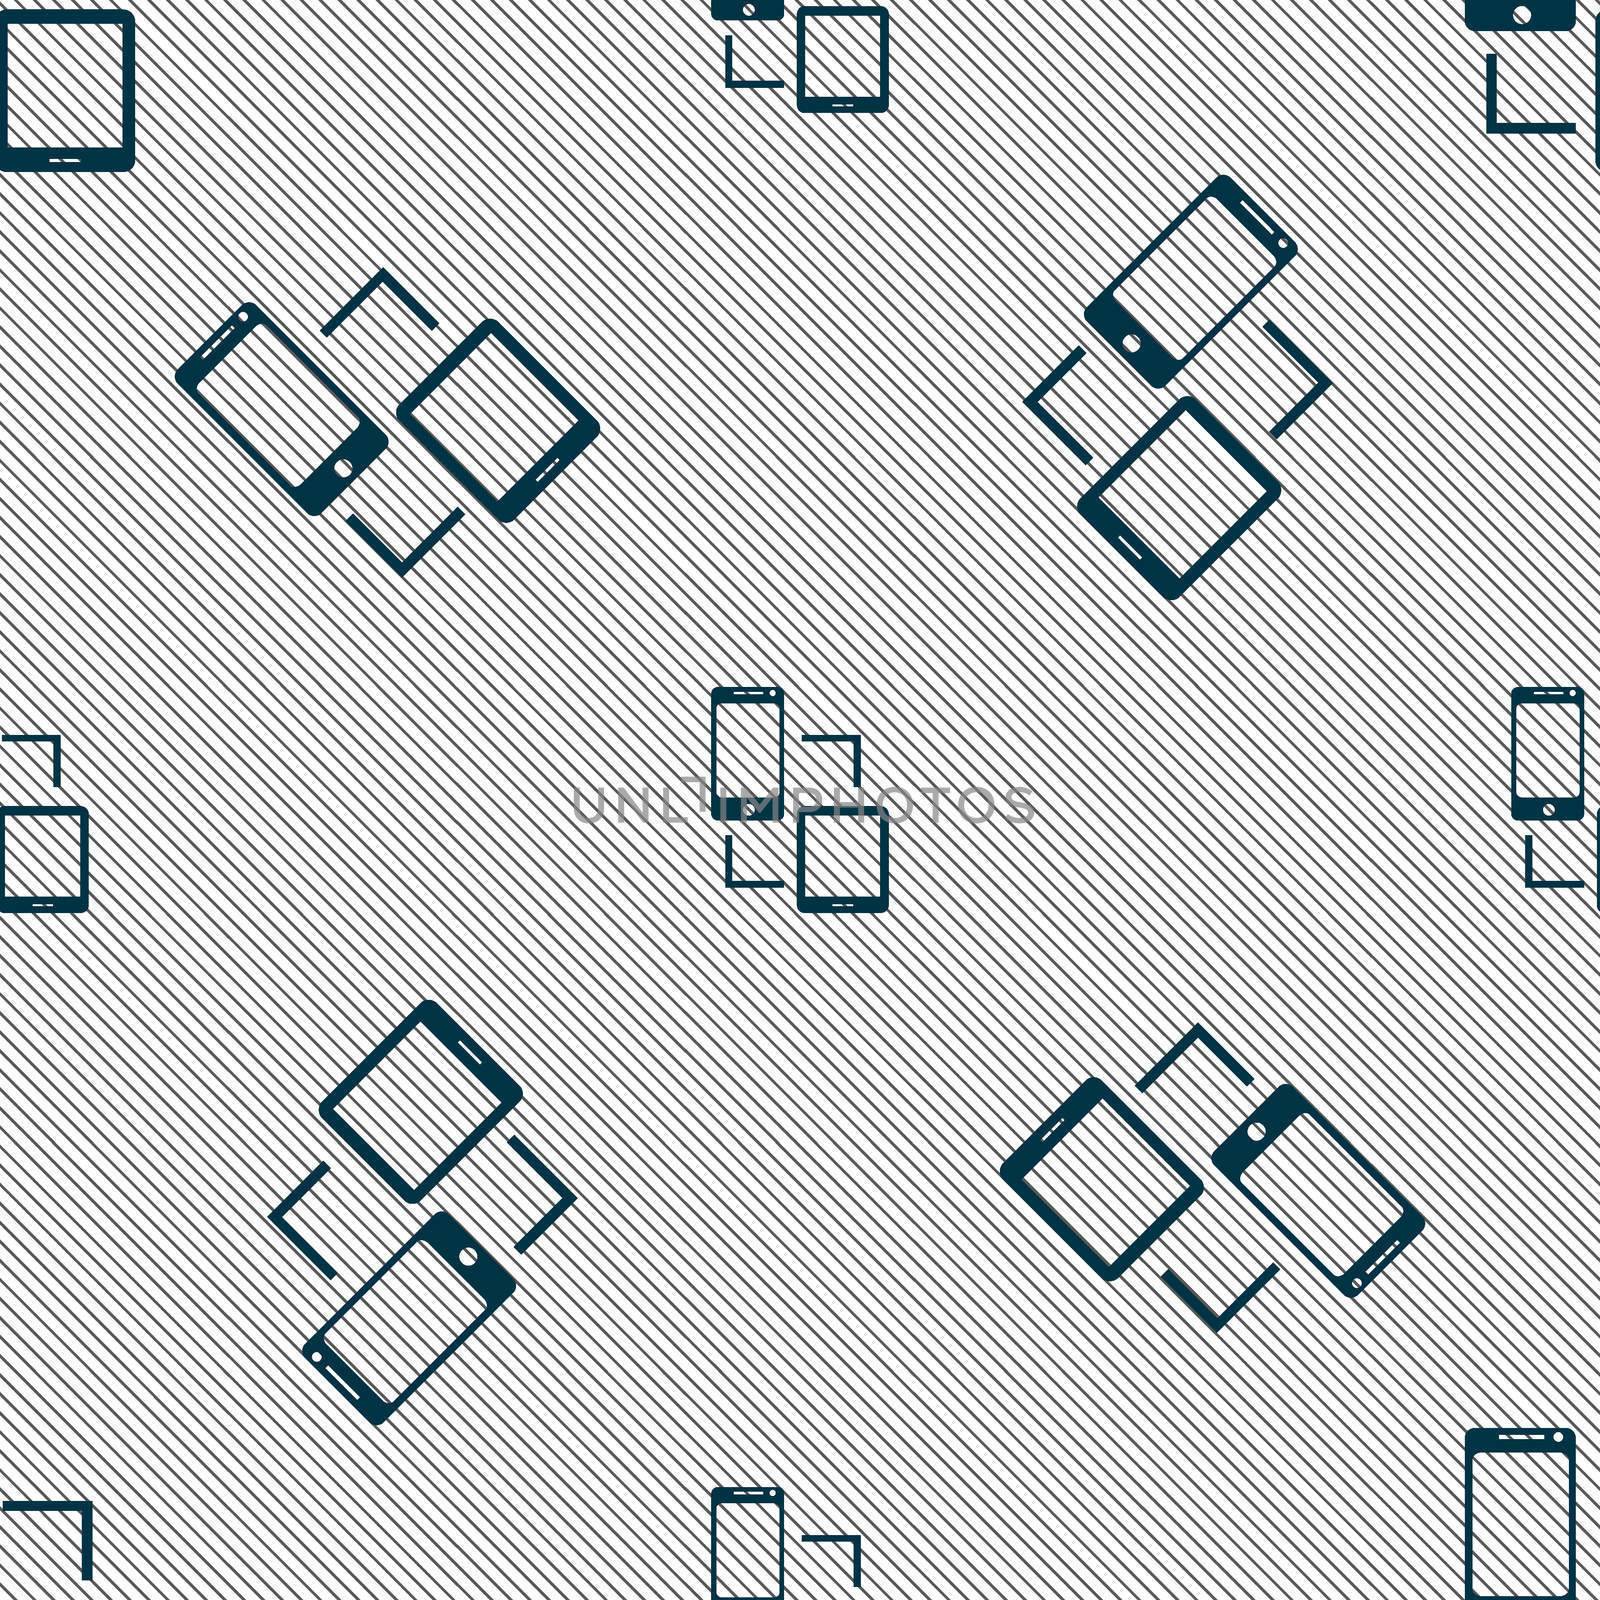 Synchronization sign icon. communicators sync symbol. Data exchange. Seamless pattern with geometric texture.  by serhii_lohvyniuk